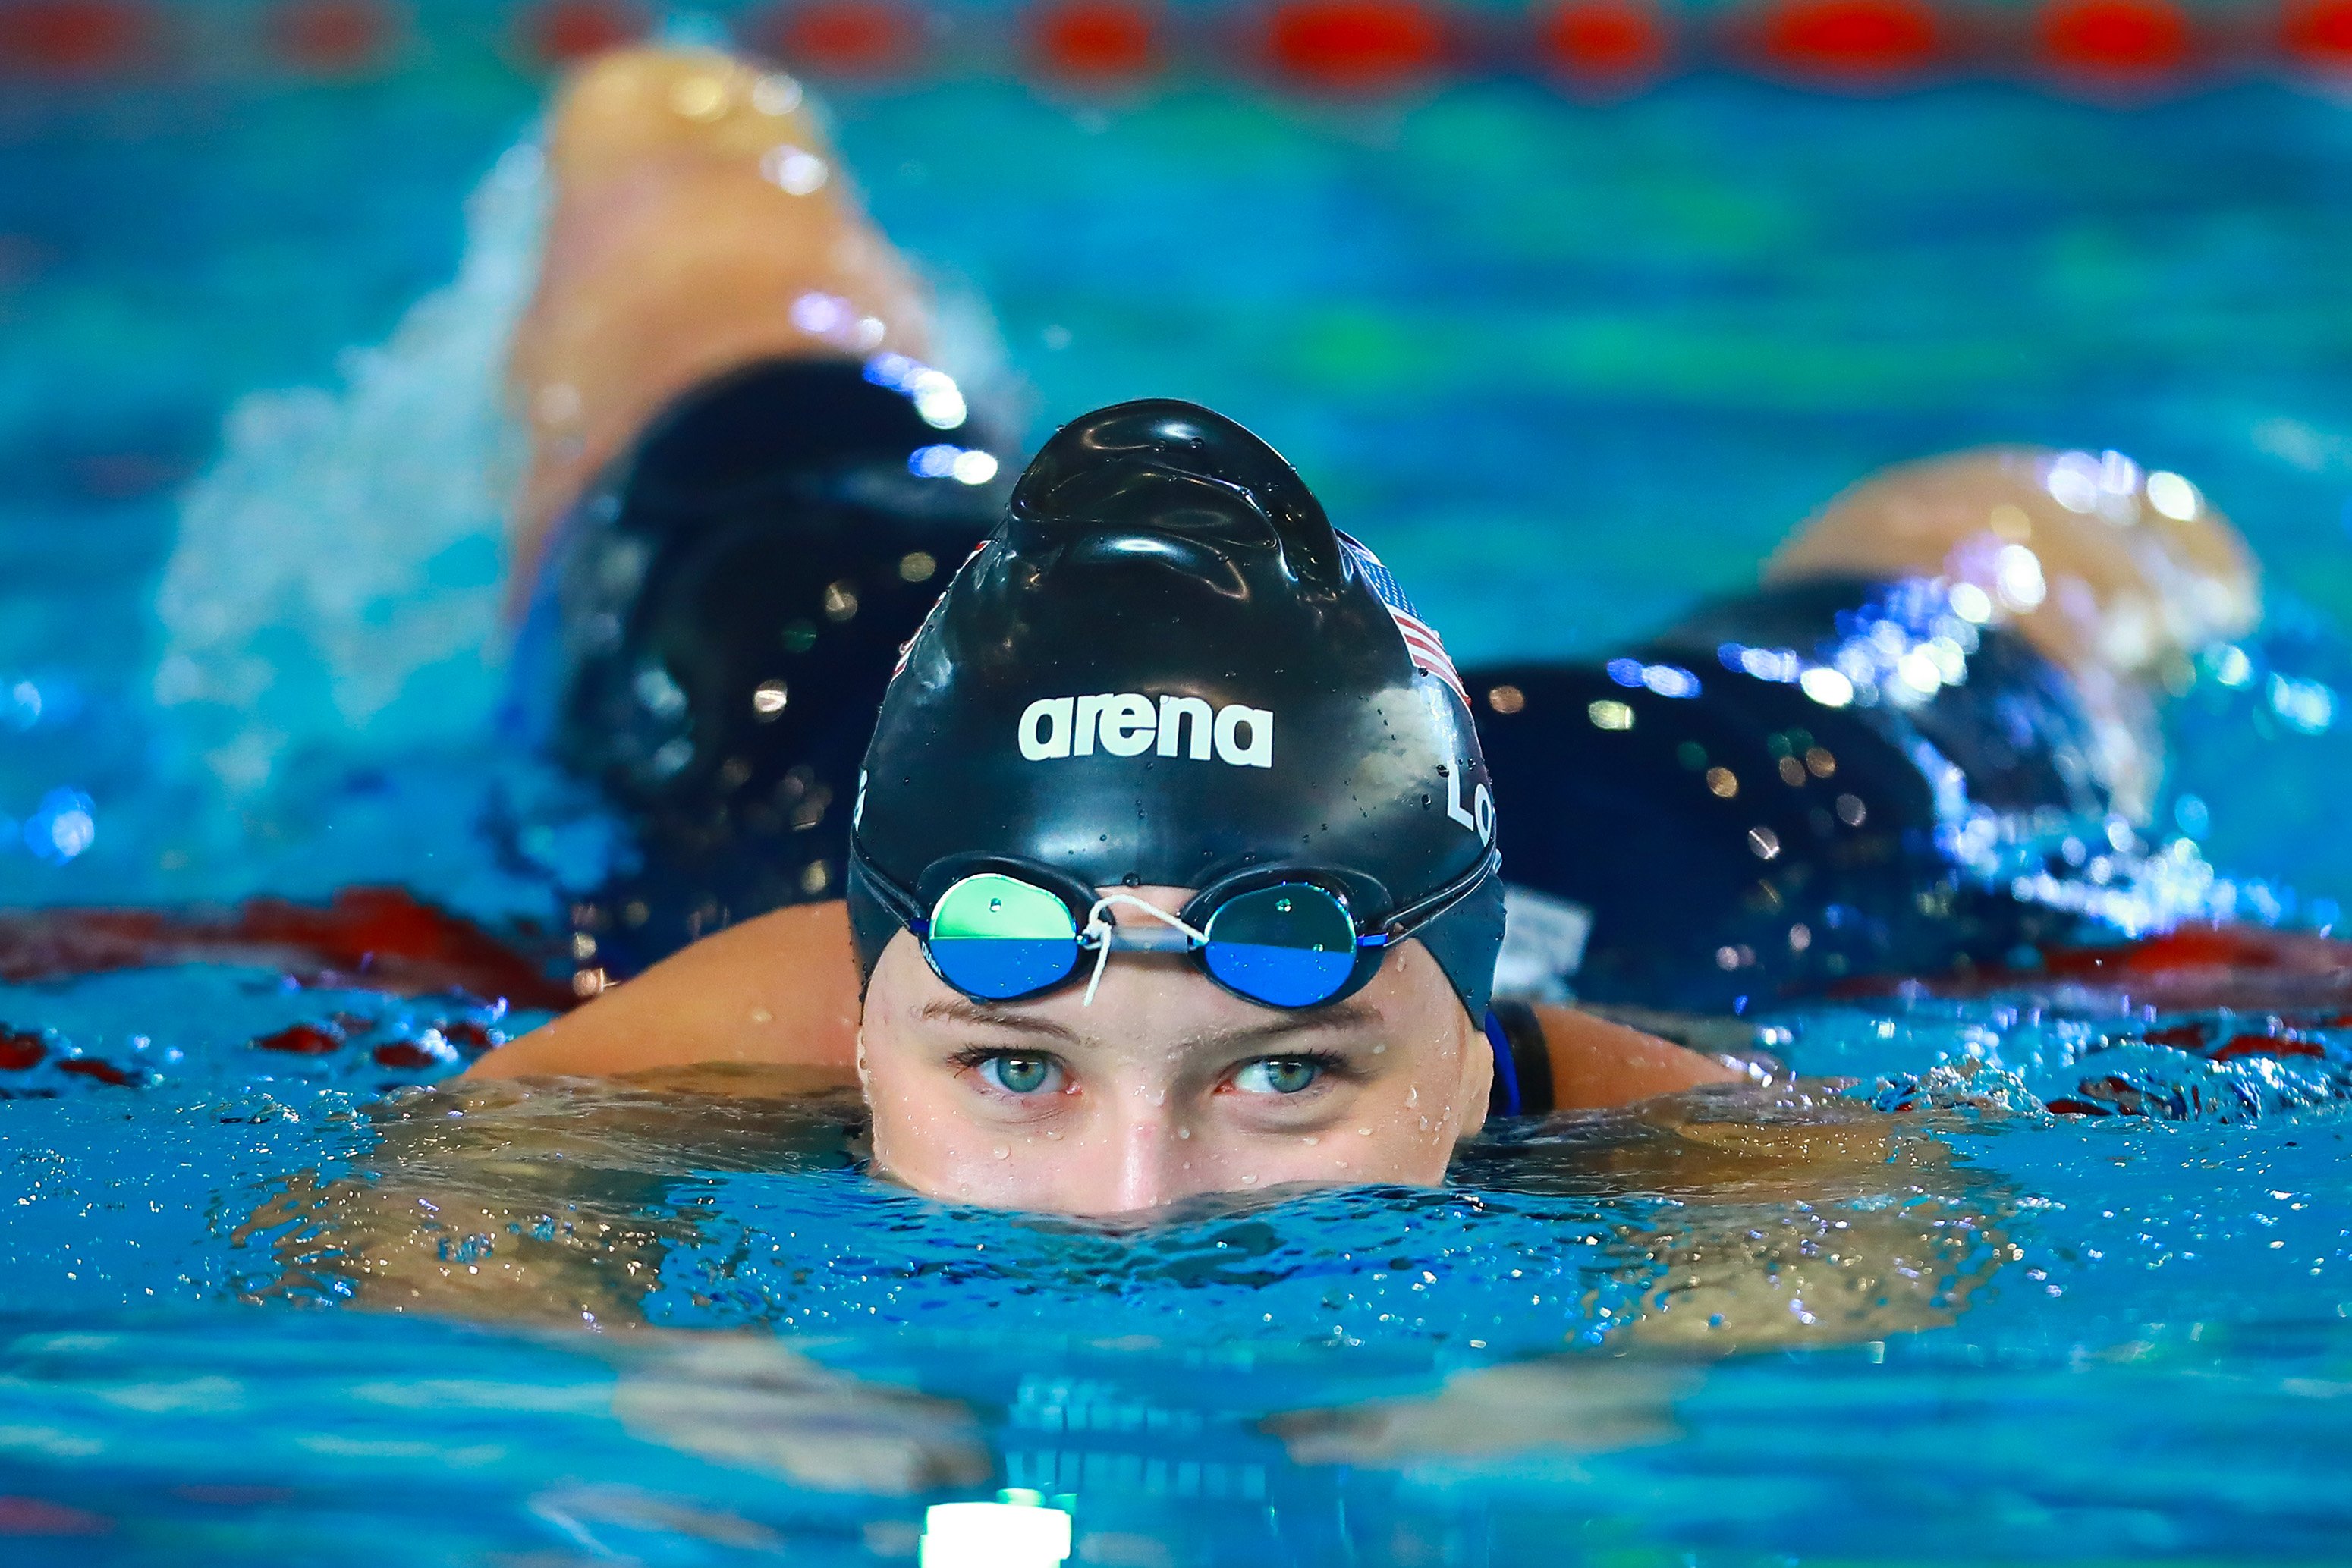 Paralympian Jessica Long in the pool following a women's 100 meter breaststroke race